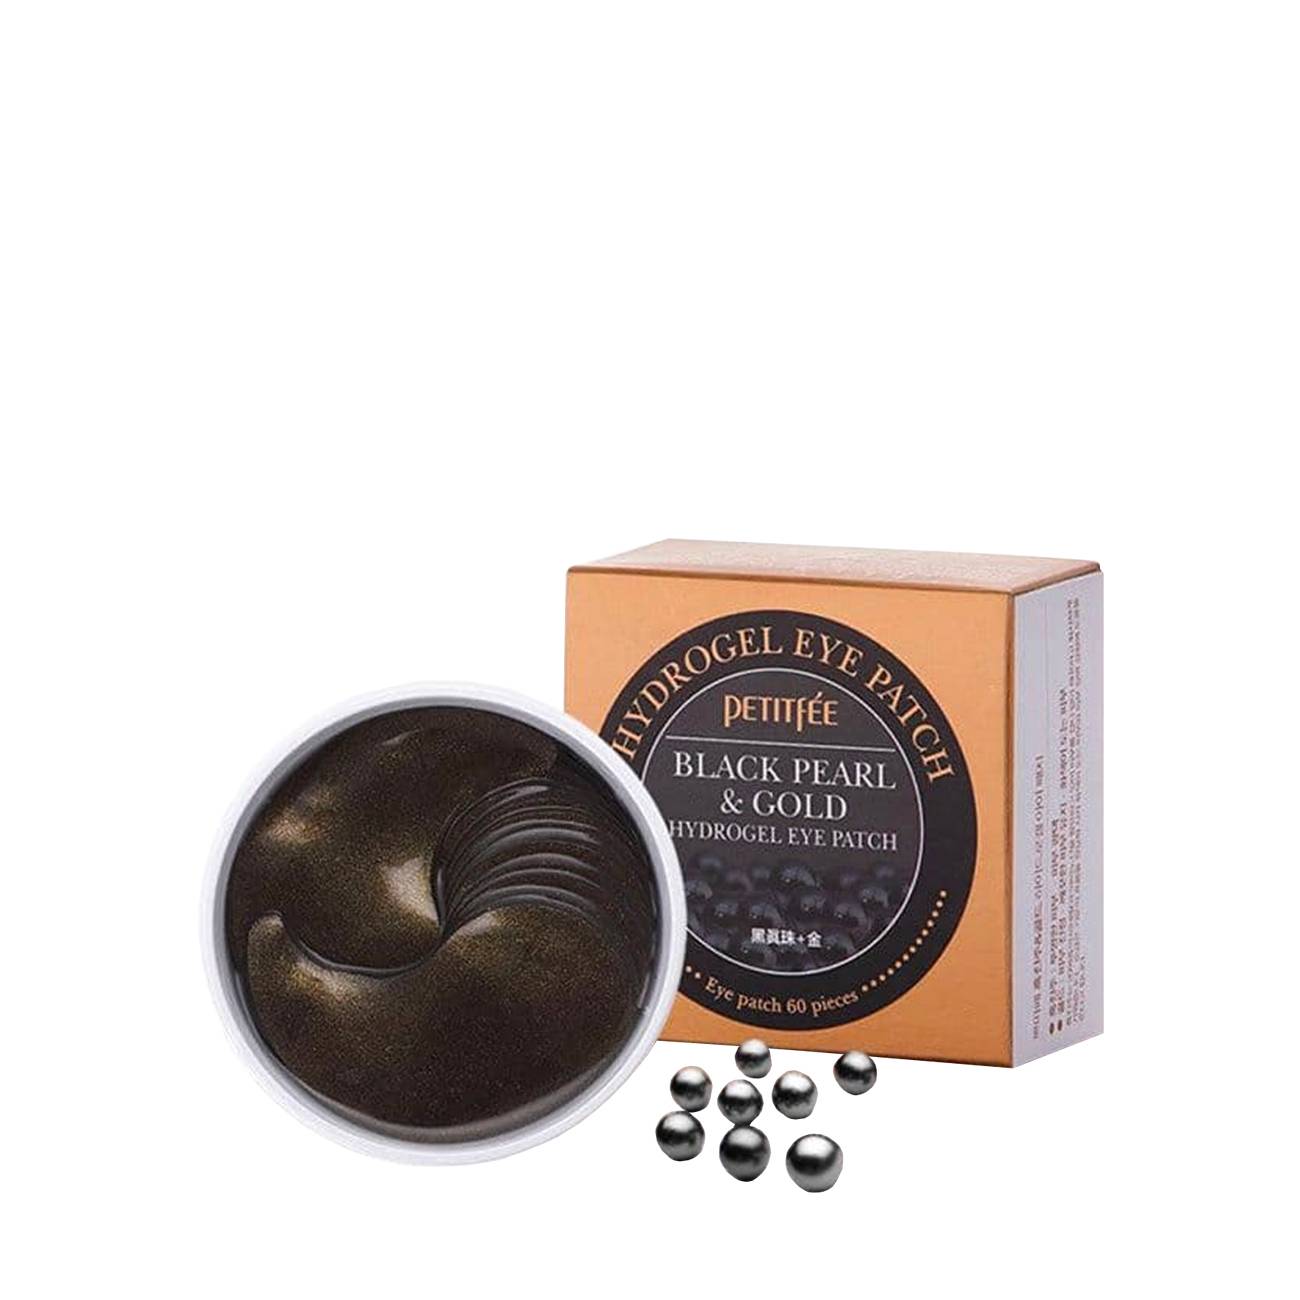 Pearl & Gold Hydrogel Eye Patch – 60 pieces 84 gr